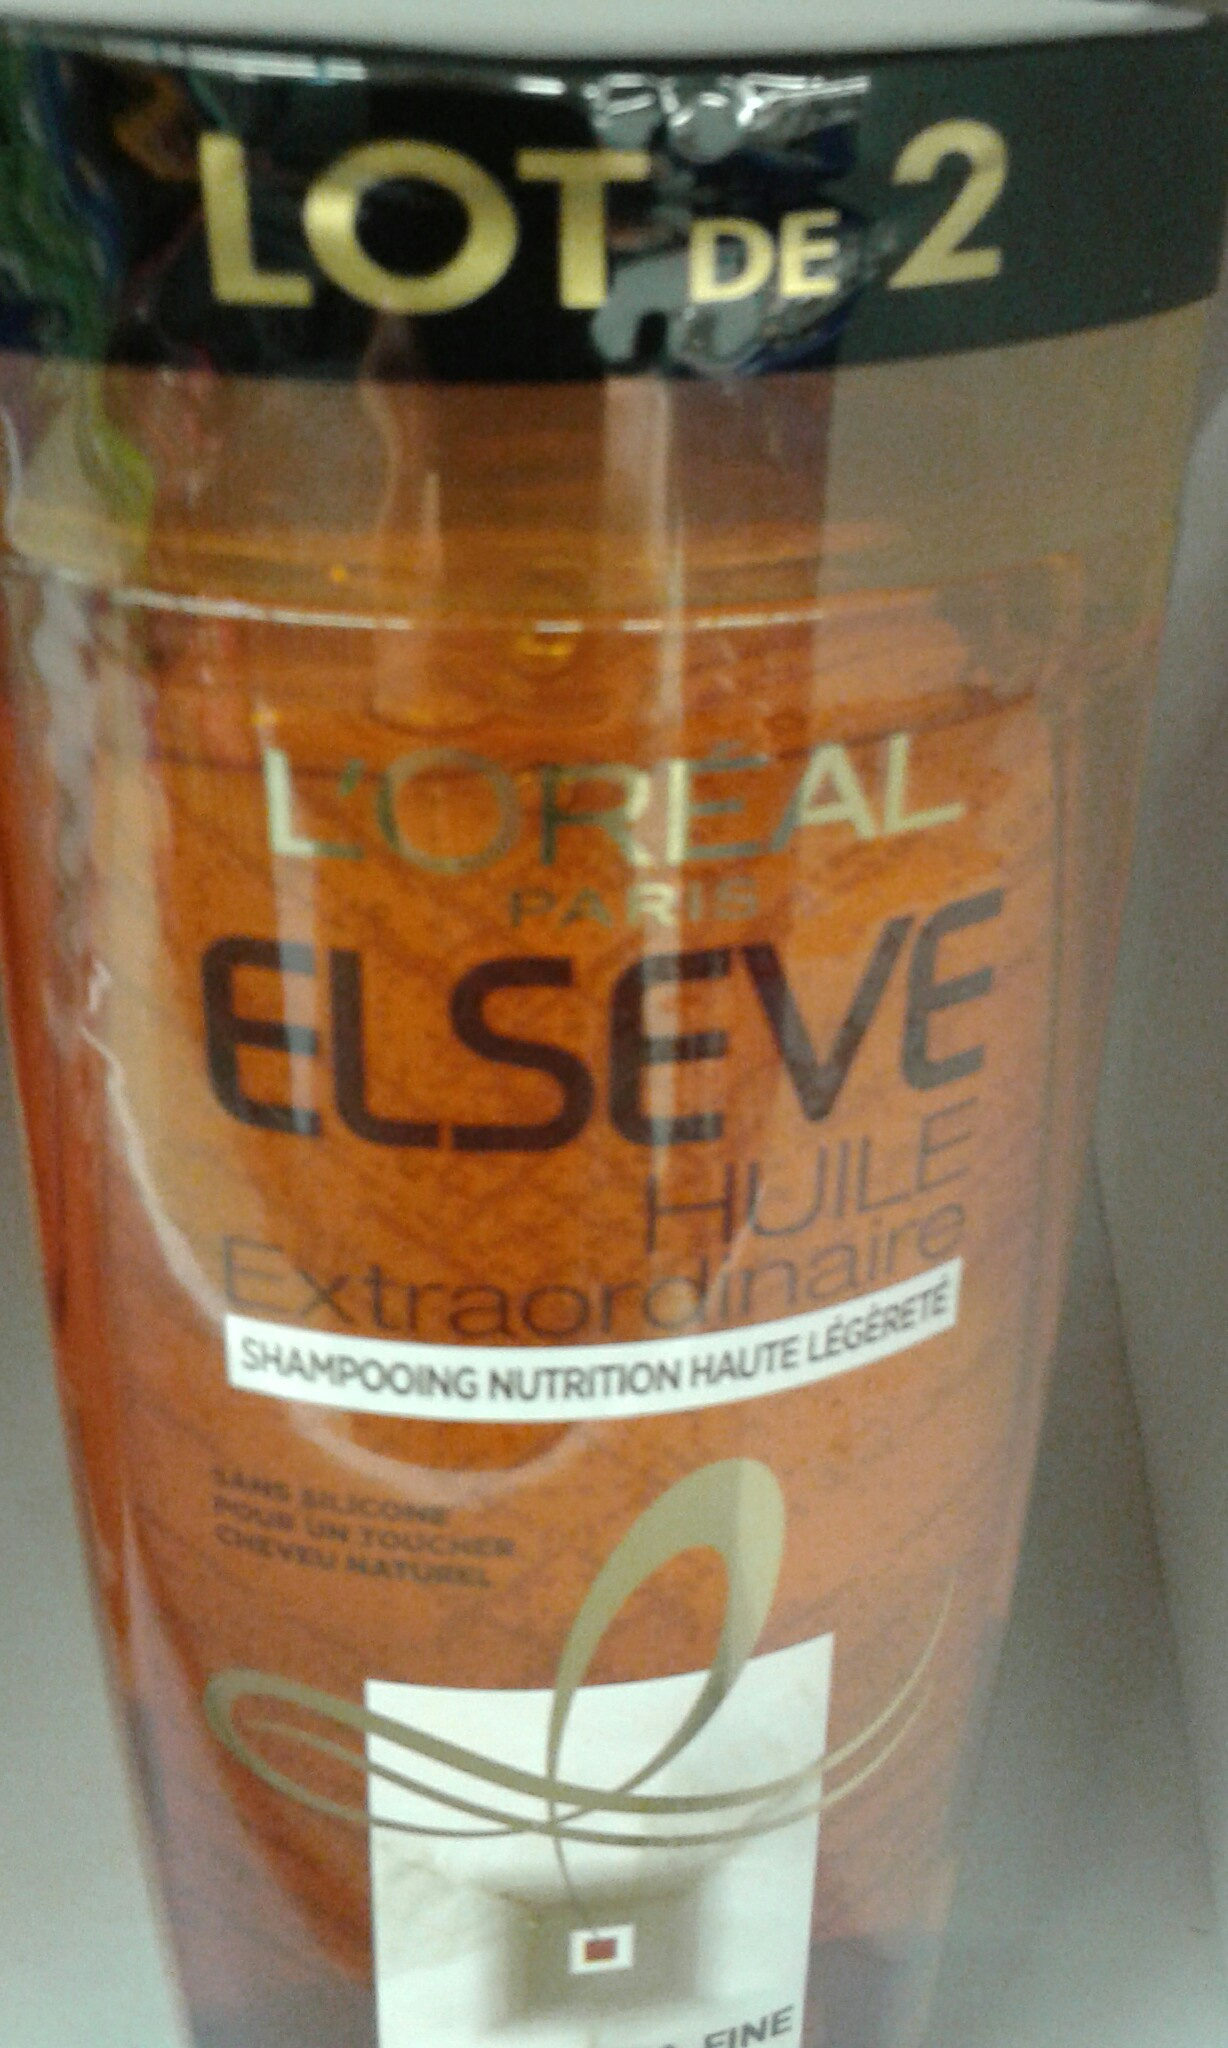 shampooing nutrition légère - Product - fr